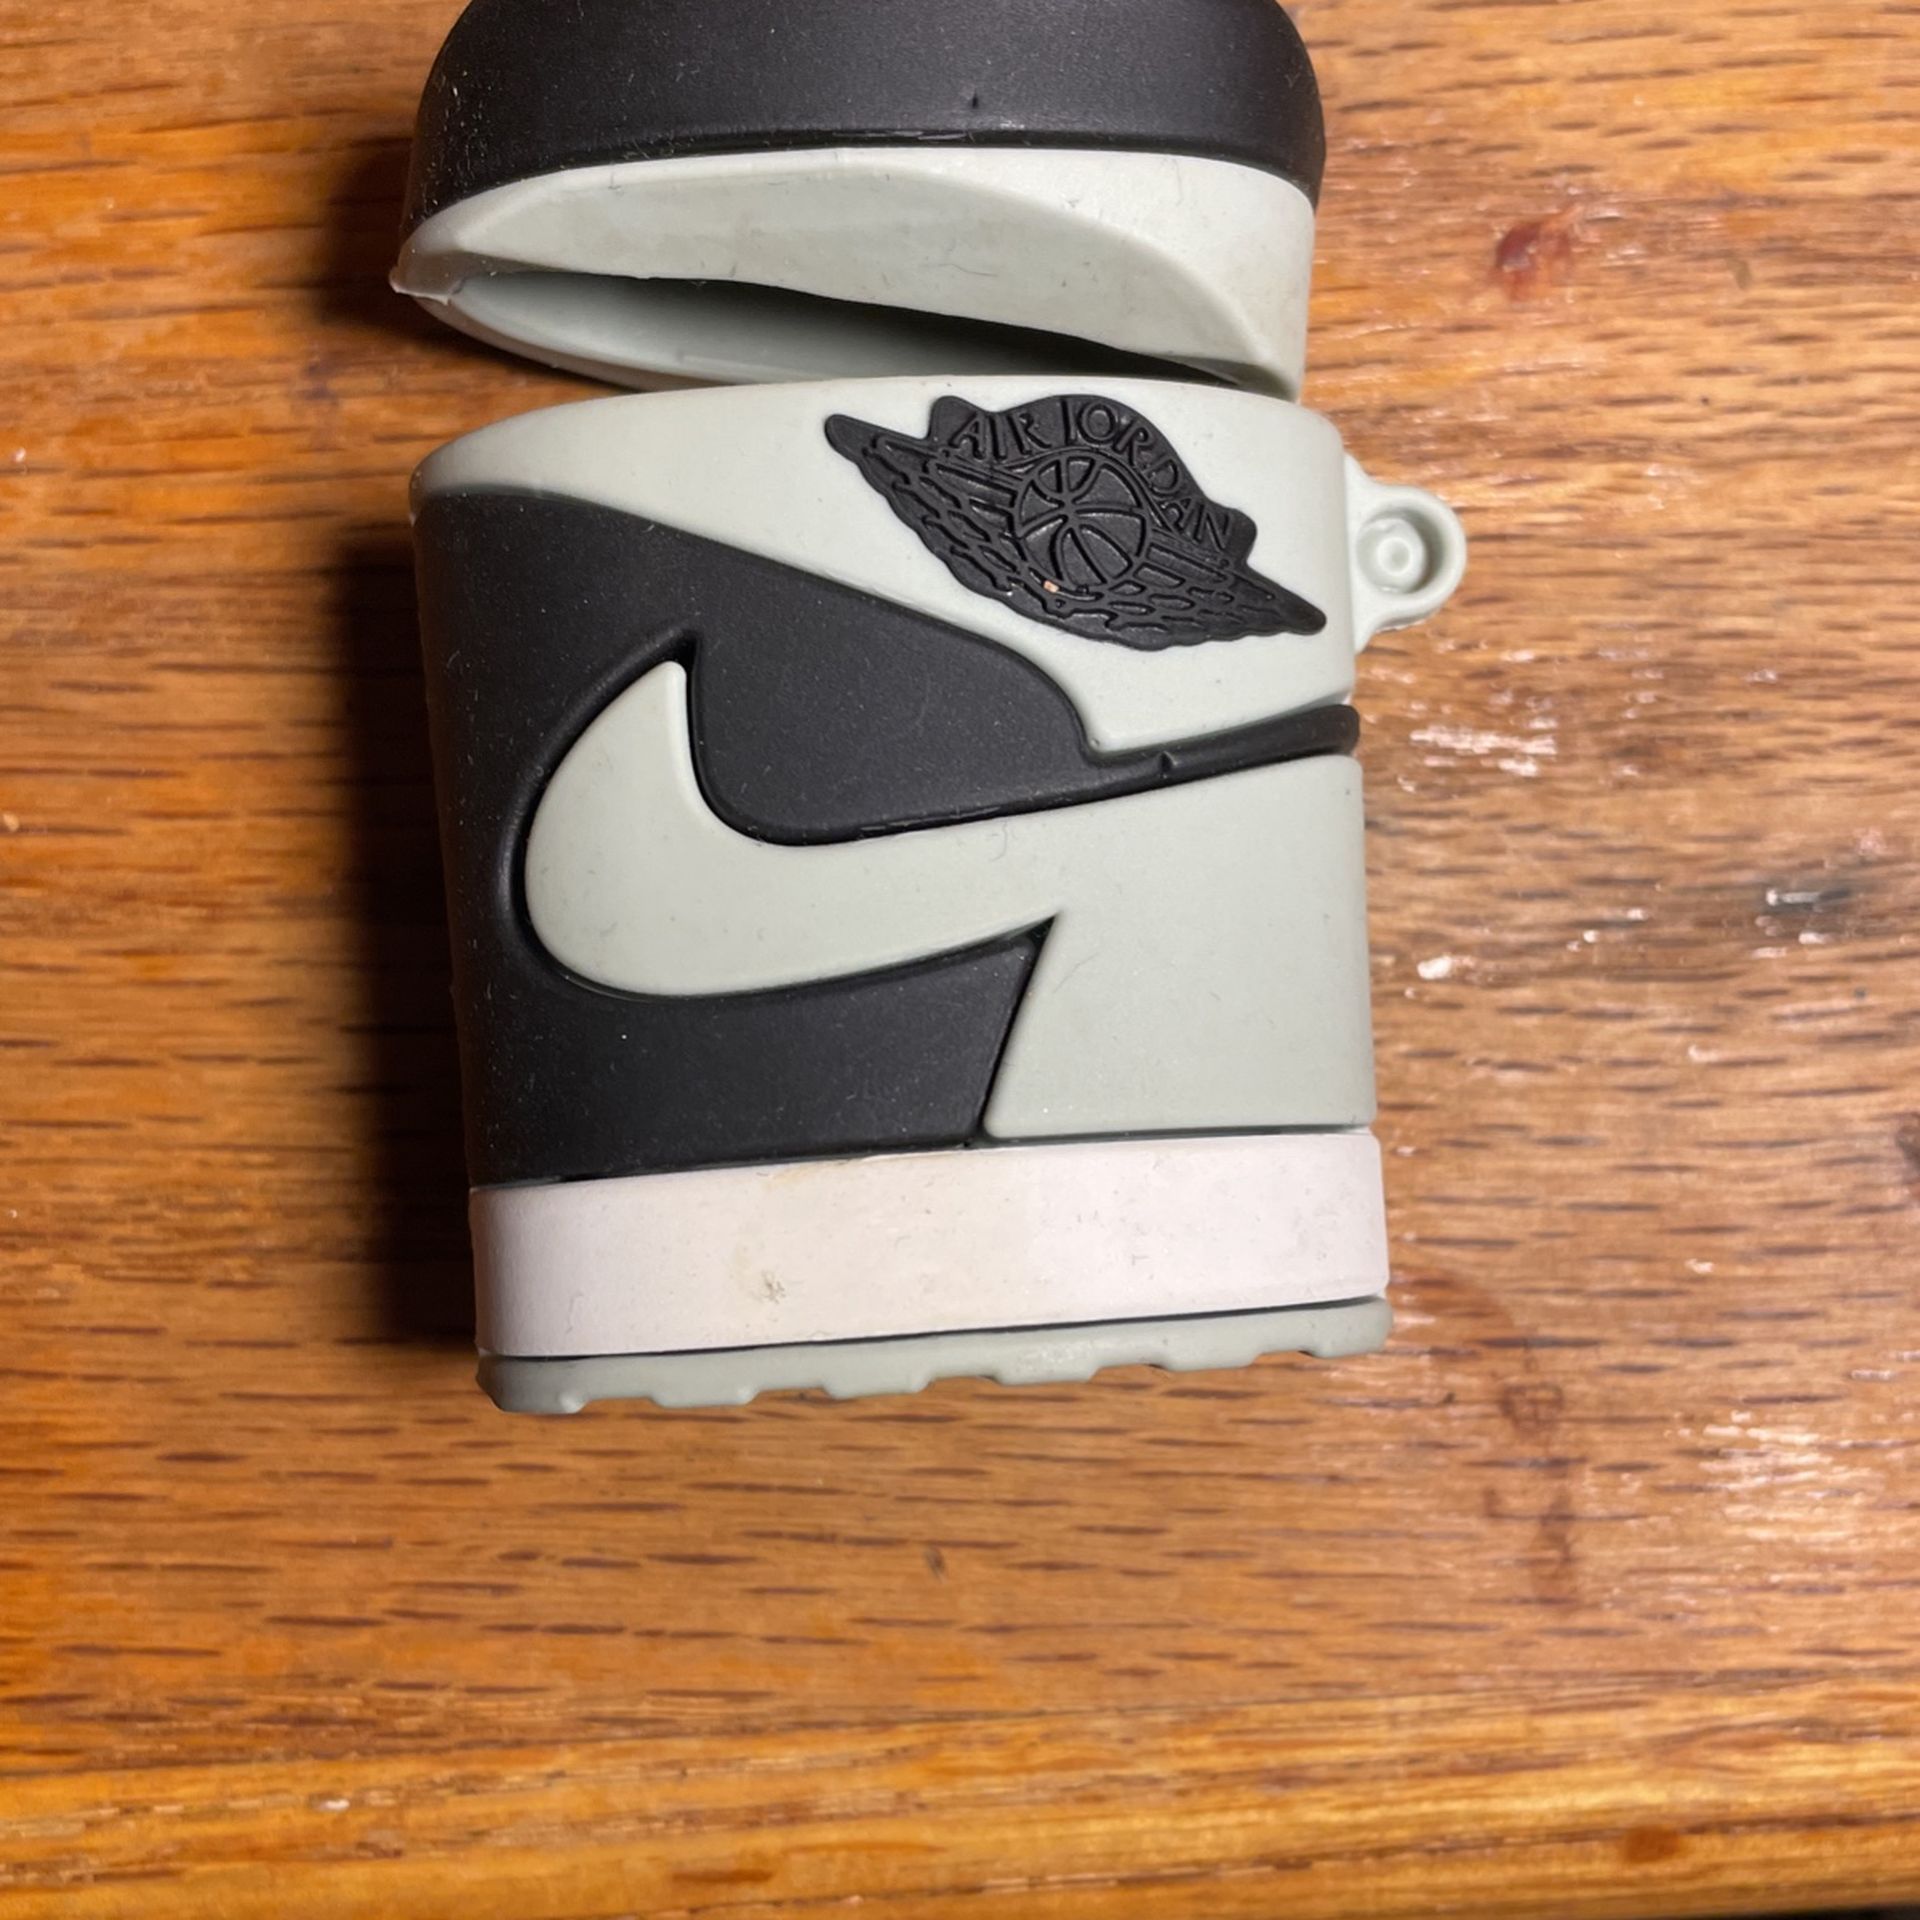 Apple Headphone Nike Protector